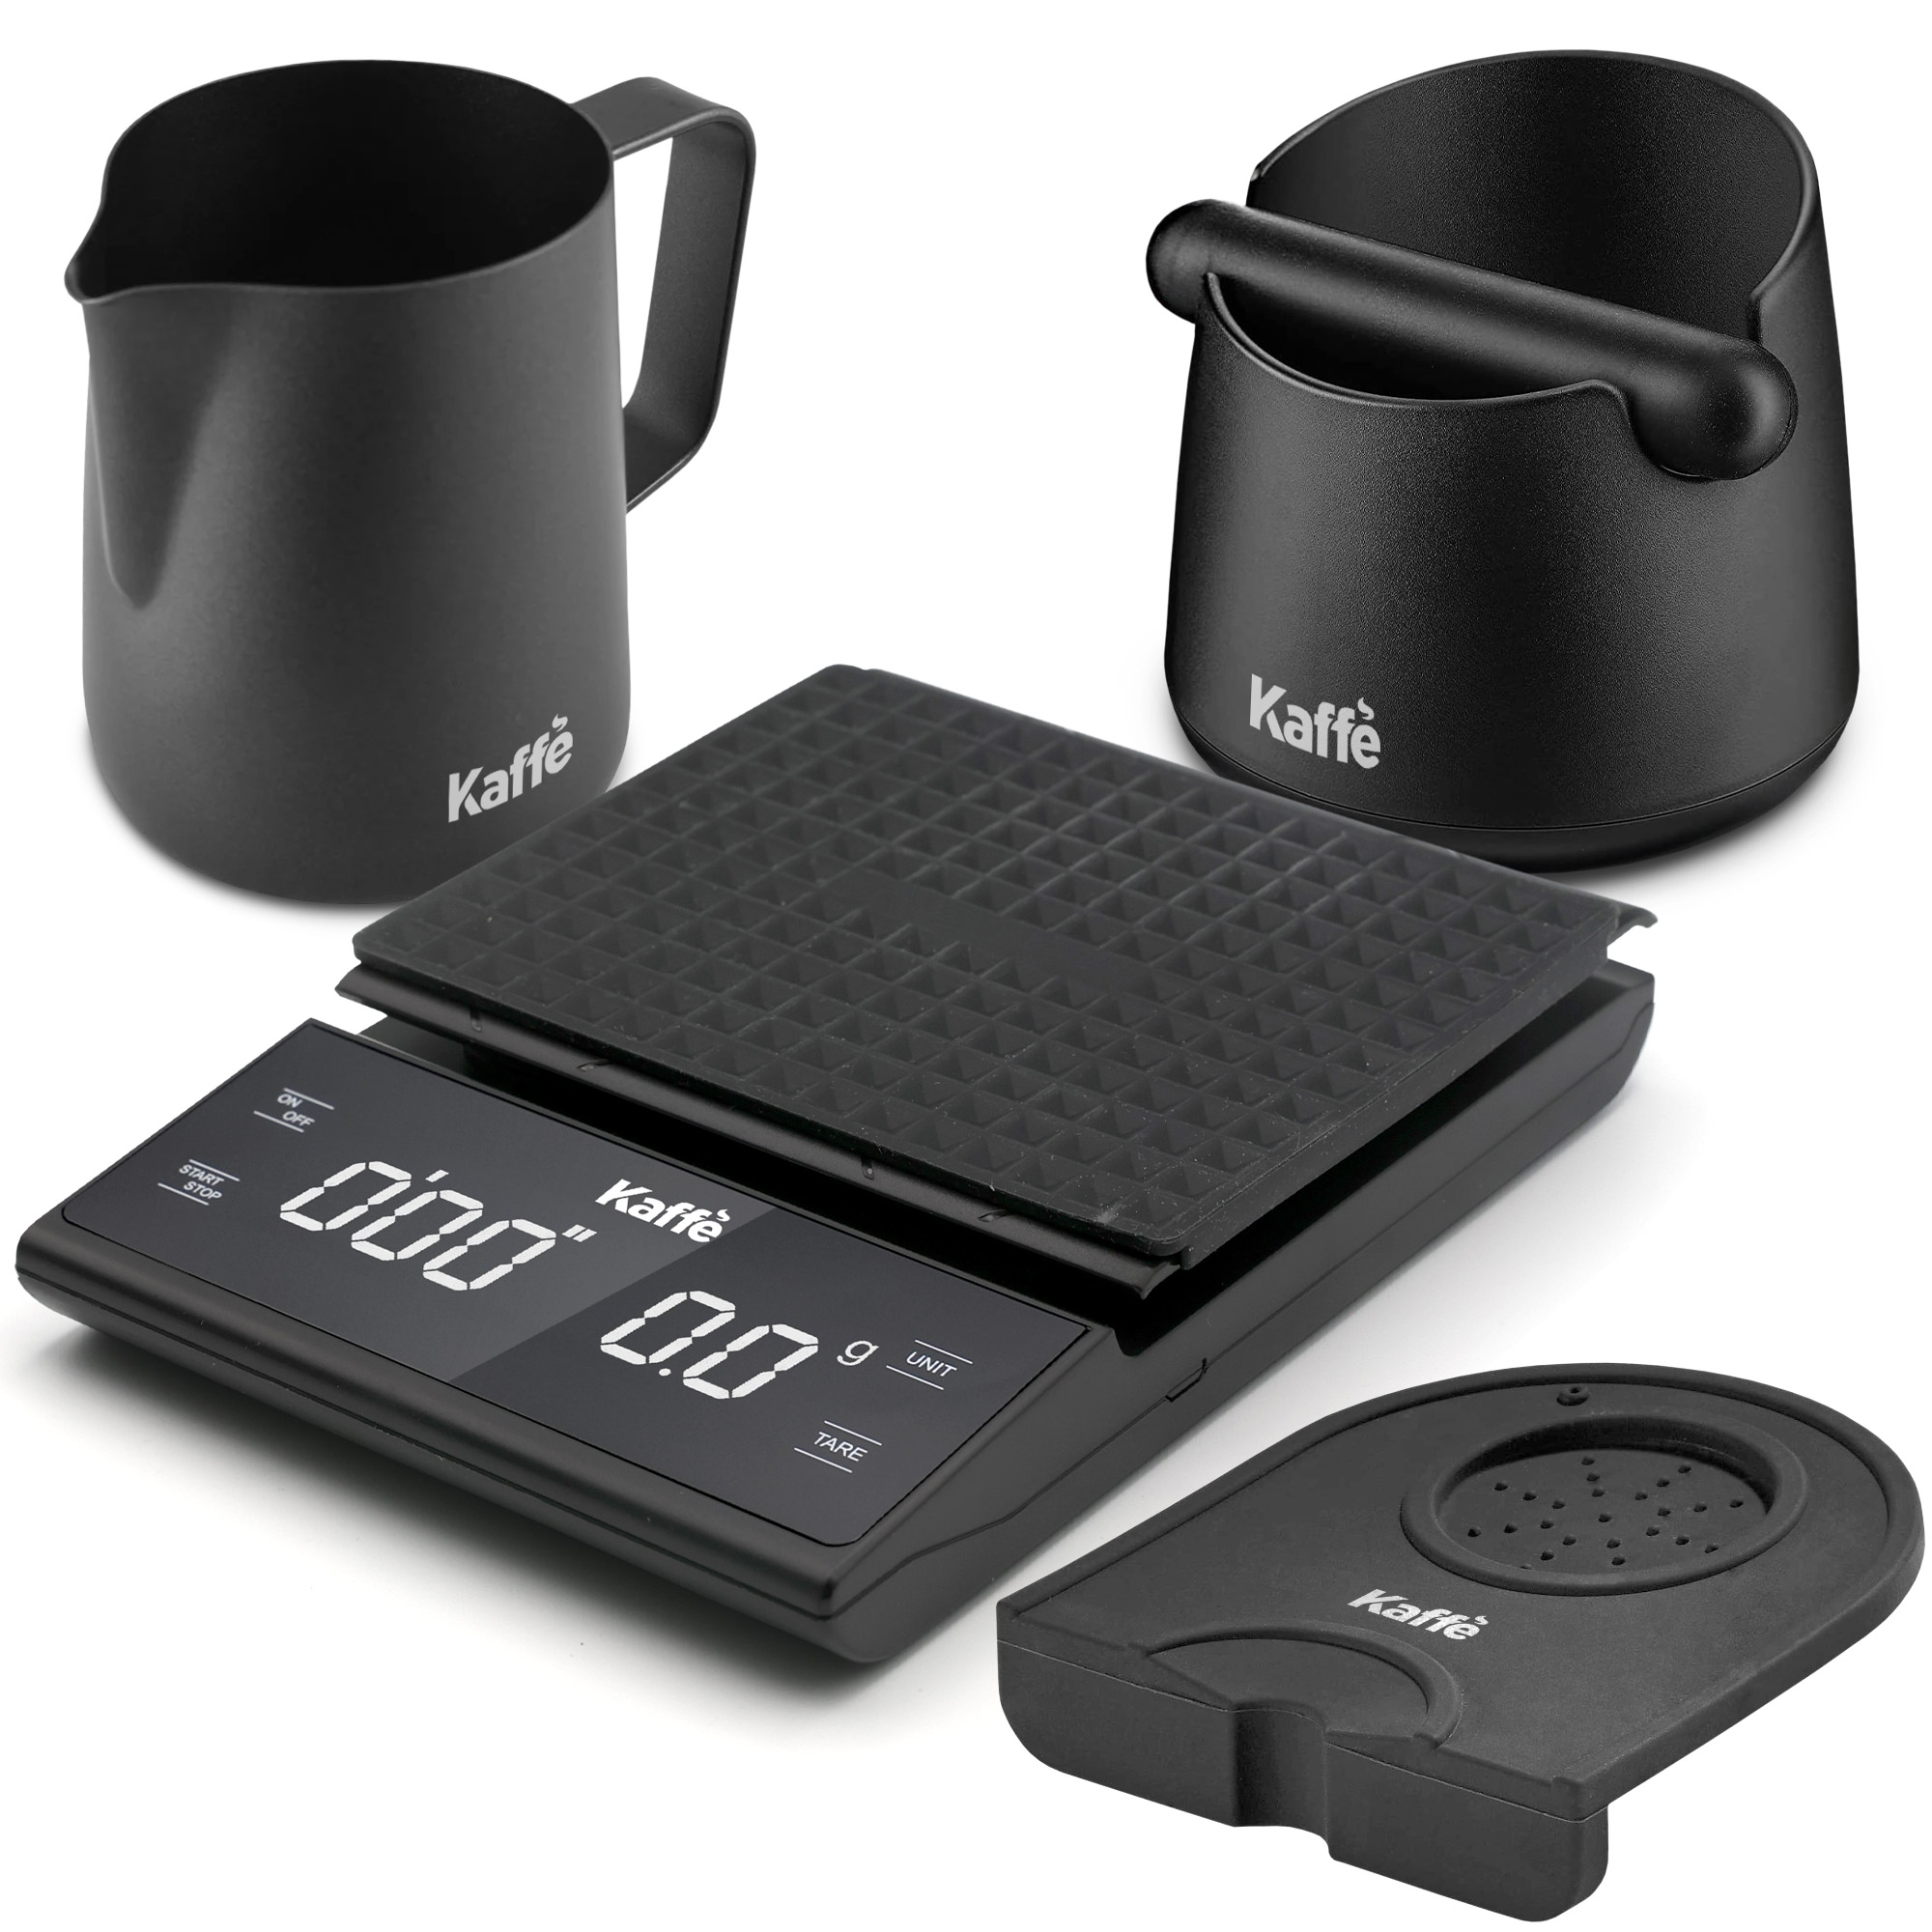 Kaffe Premium Espresso Accessories, 4 in 1 Bundle, Knock box, Digital Weighing scale, Tamper Mat, Milk Pitcher - image 4 of 5